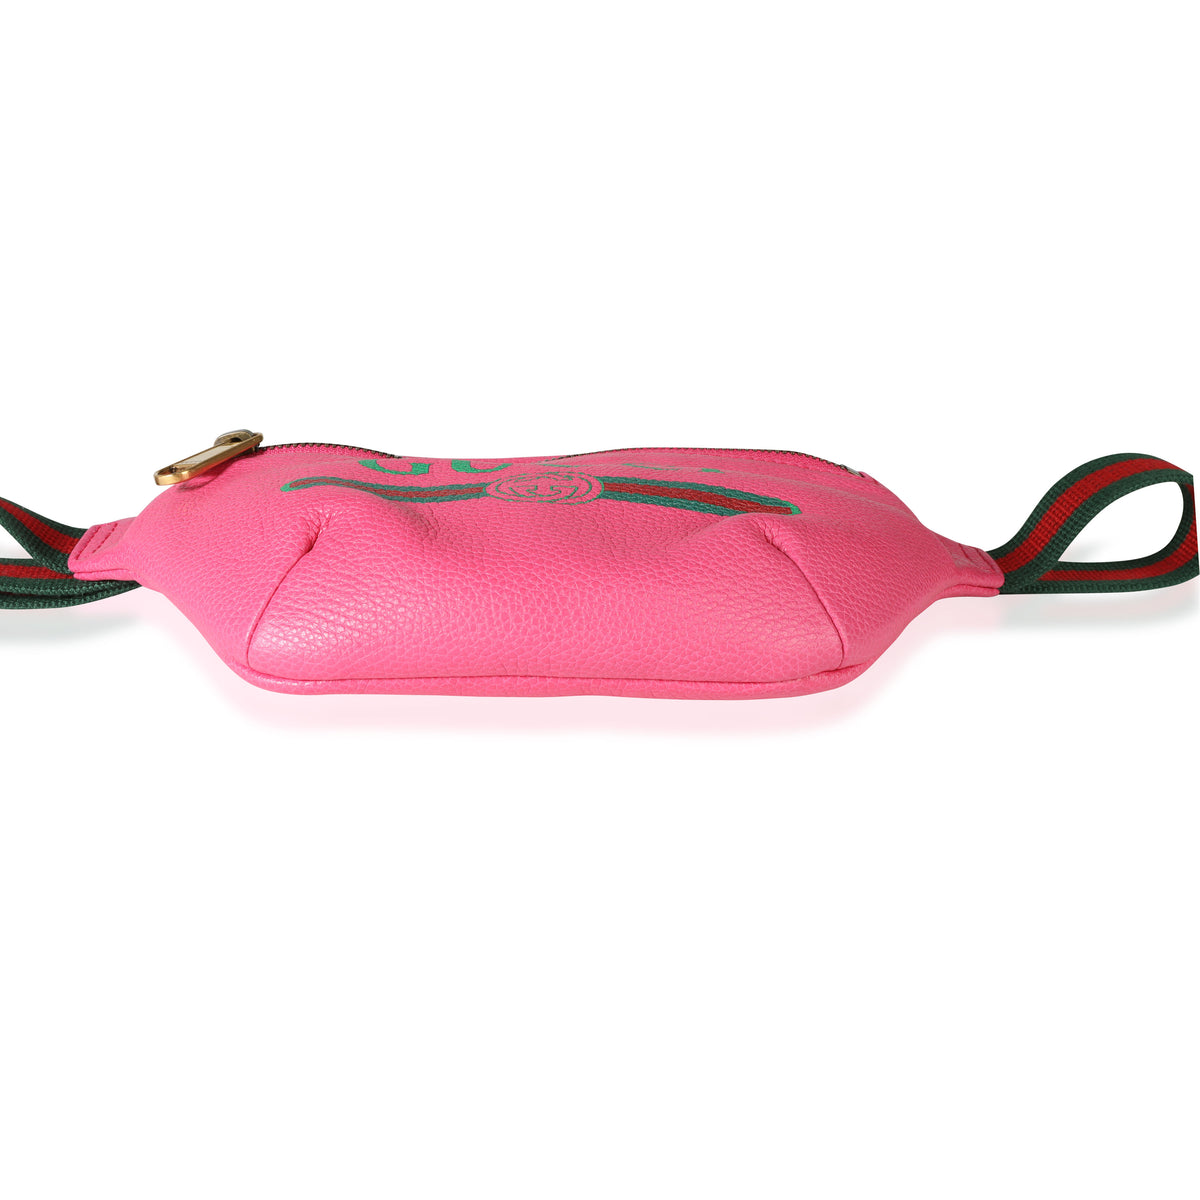 Gucci Hot Pink Logo Print Leather & Web Small Belt Bag